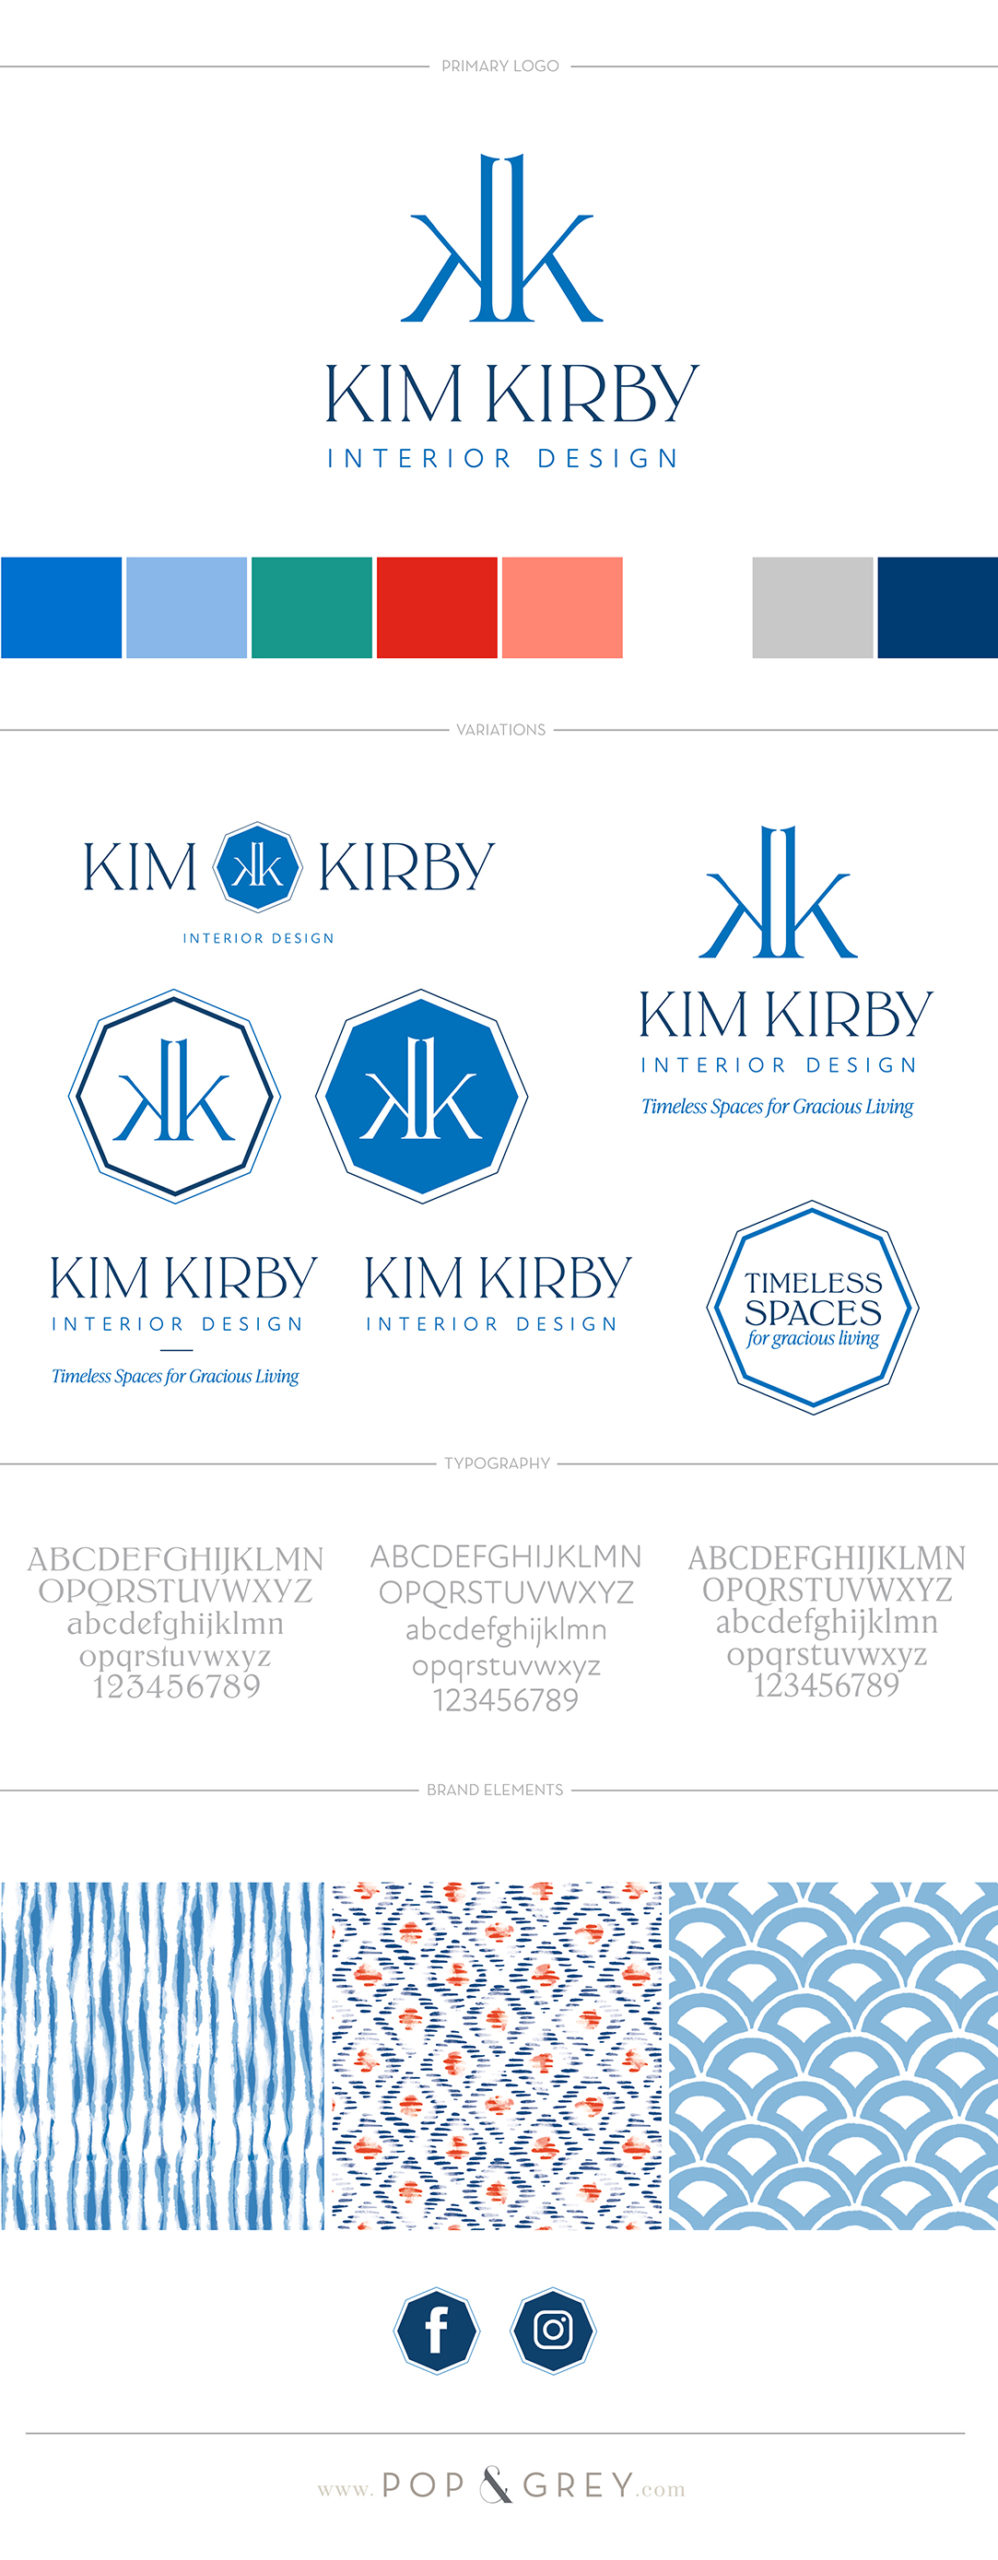 Kim Kirby Interior Design brand design by Pop & Grey